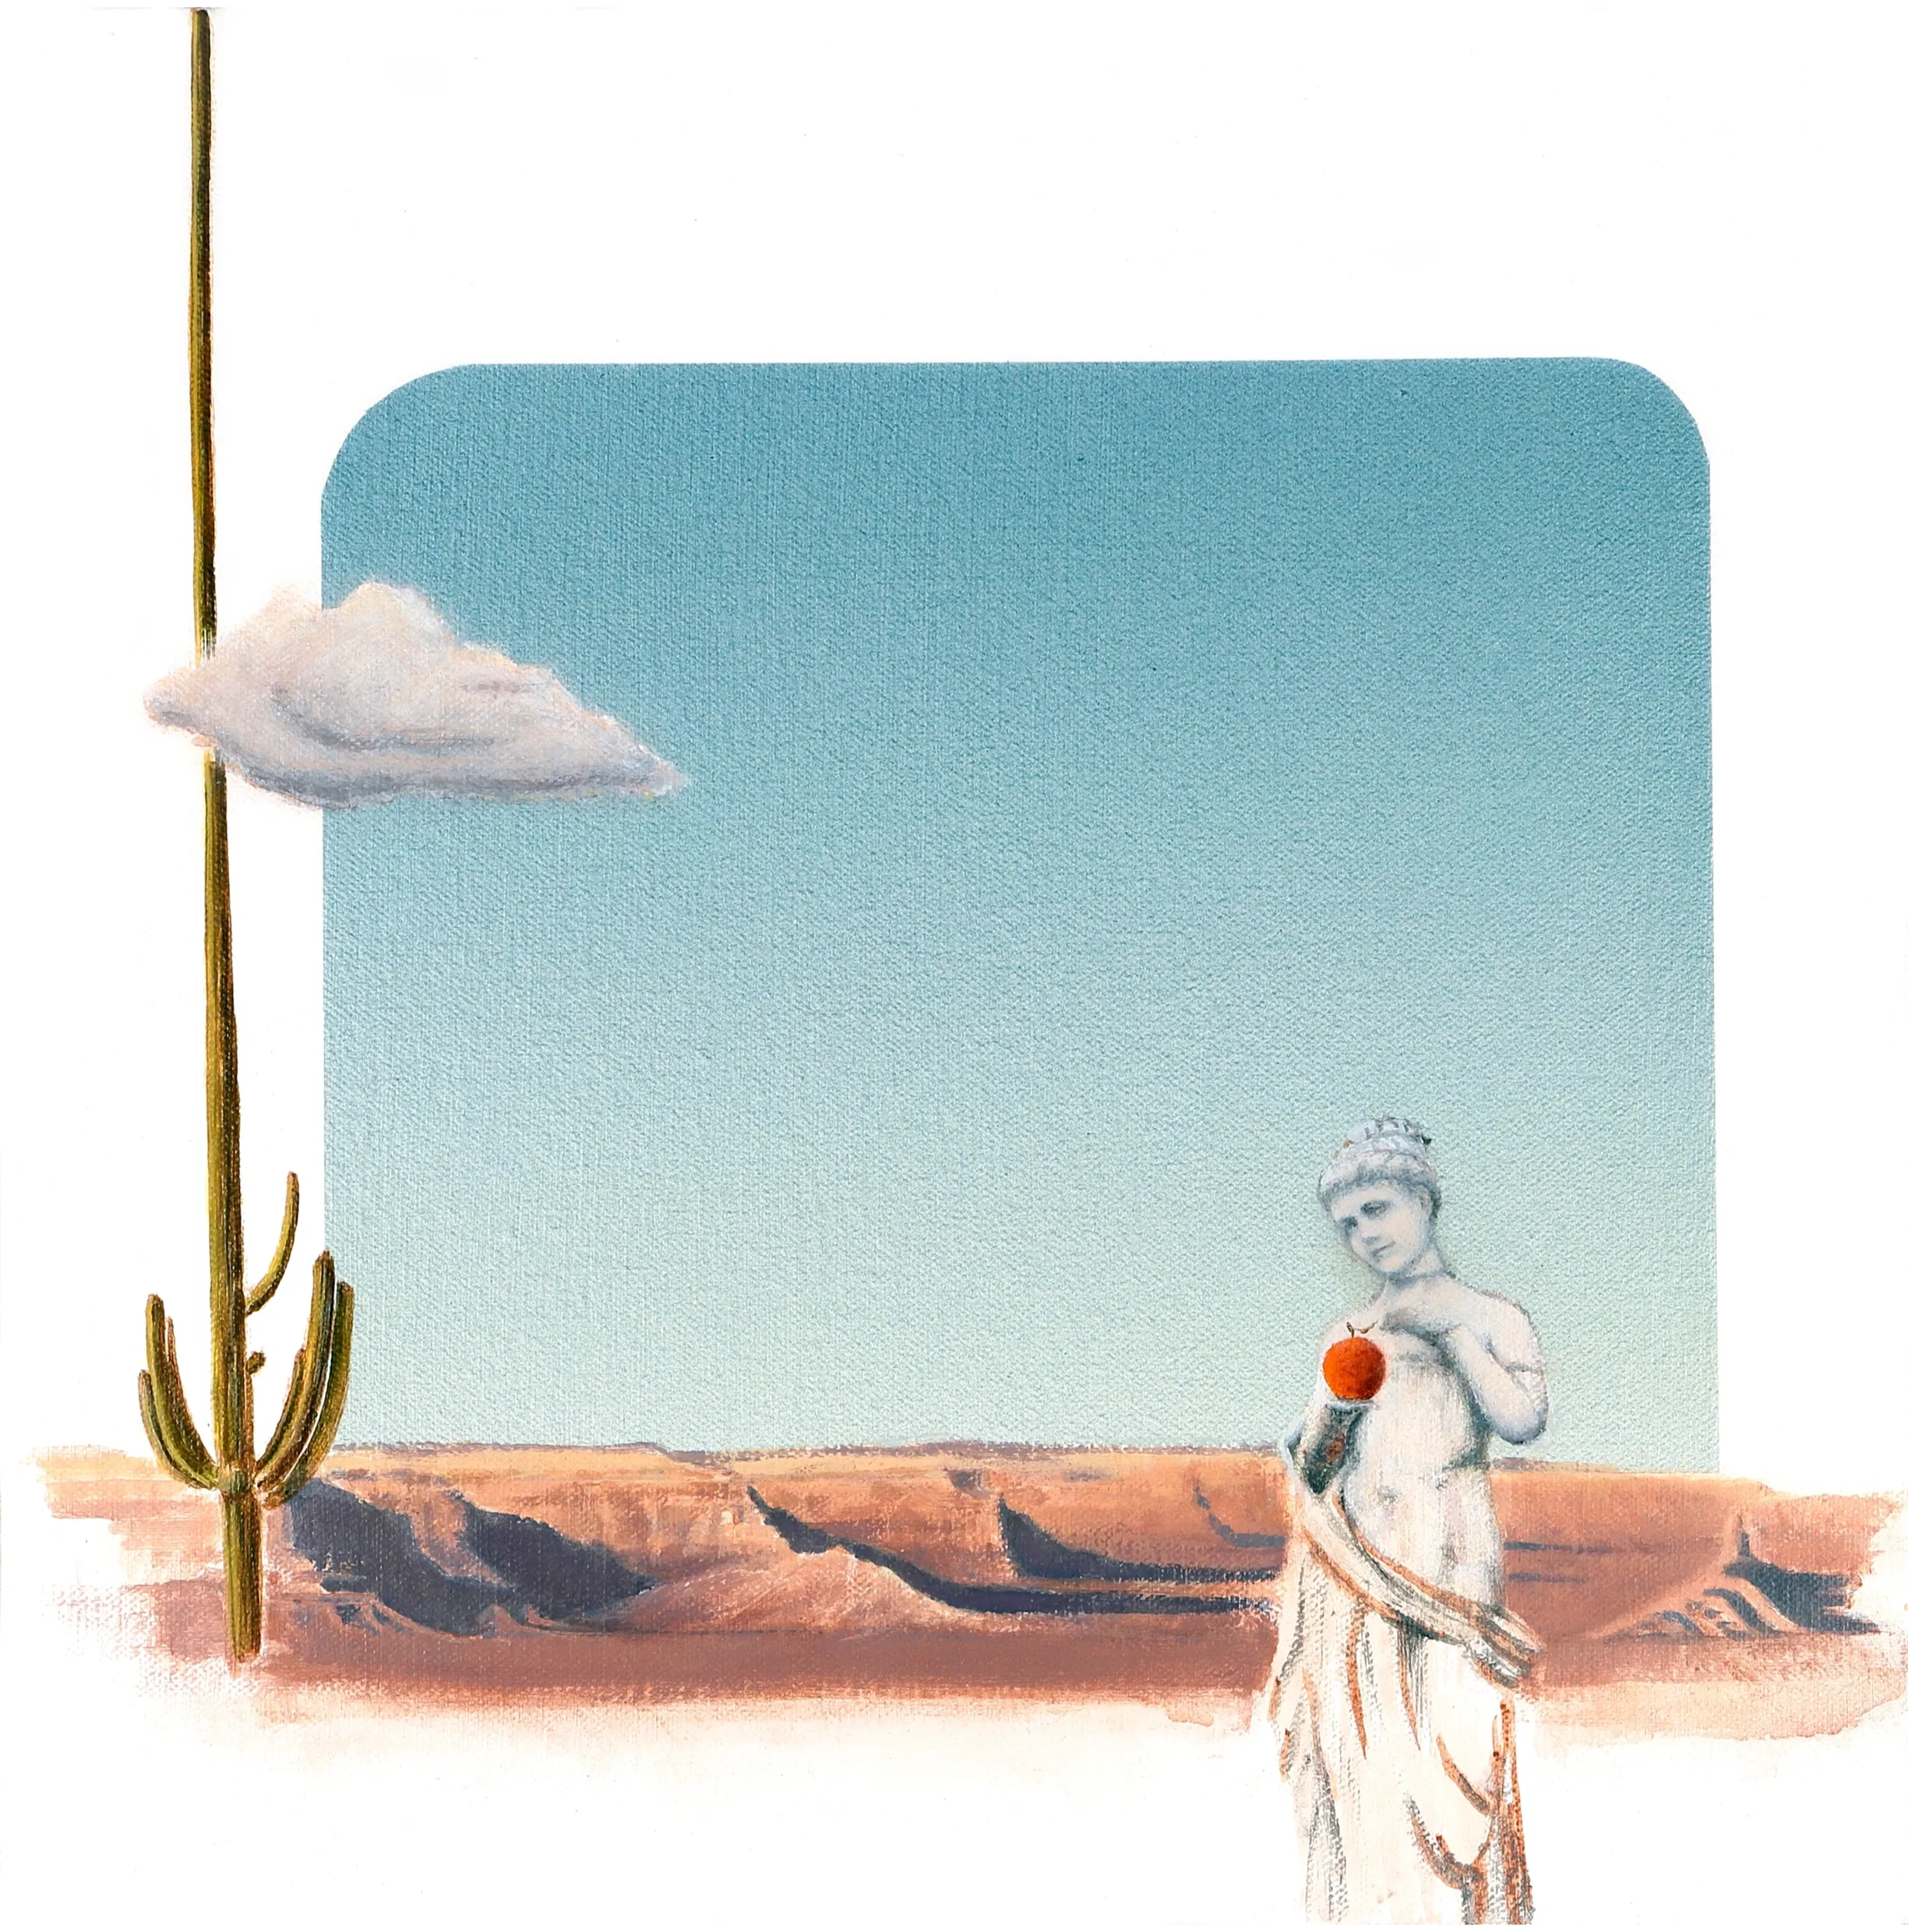 Elongated Cactus, buttes, statue - neoclassical desert - contemporary landscape painting 